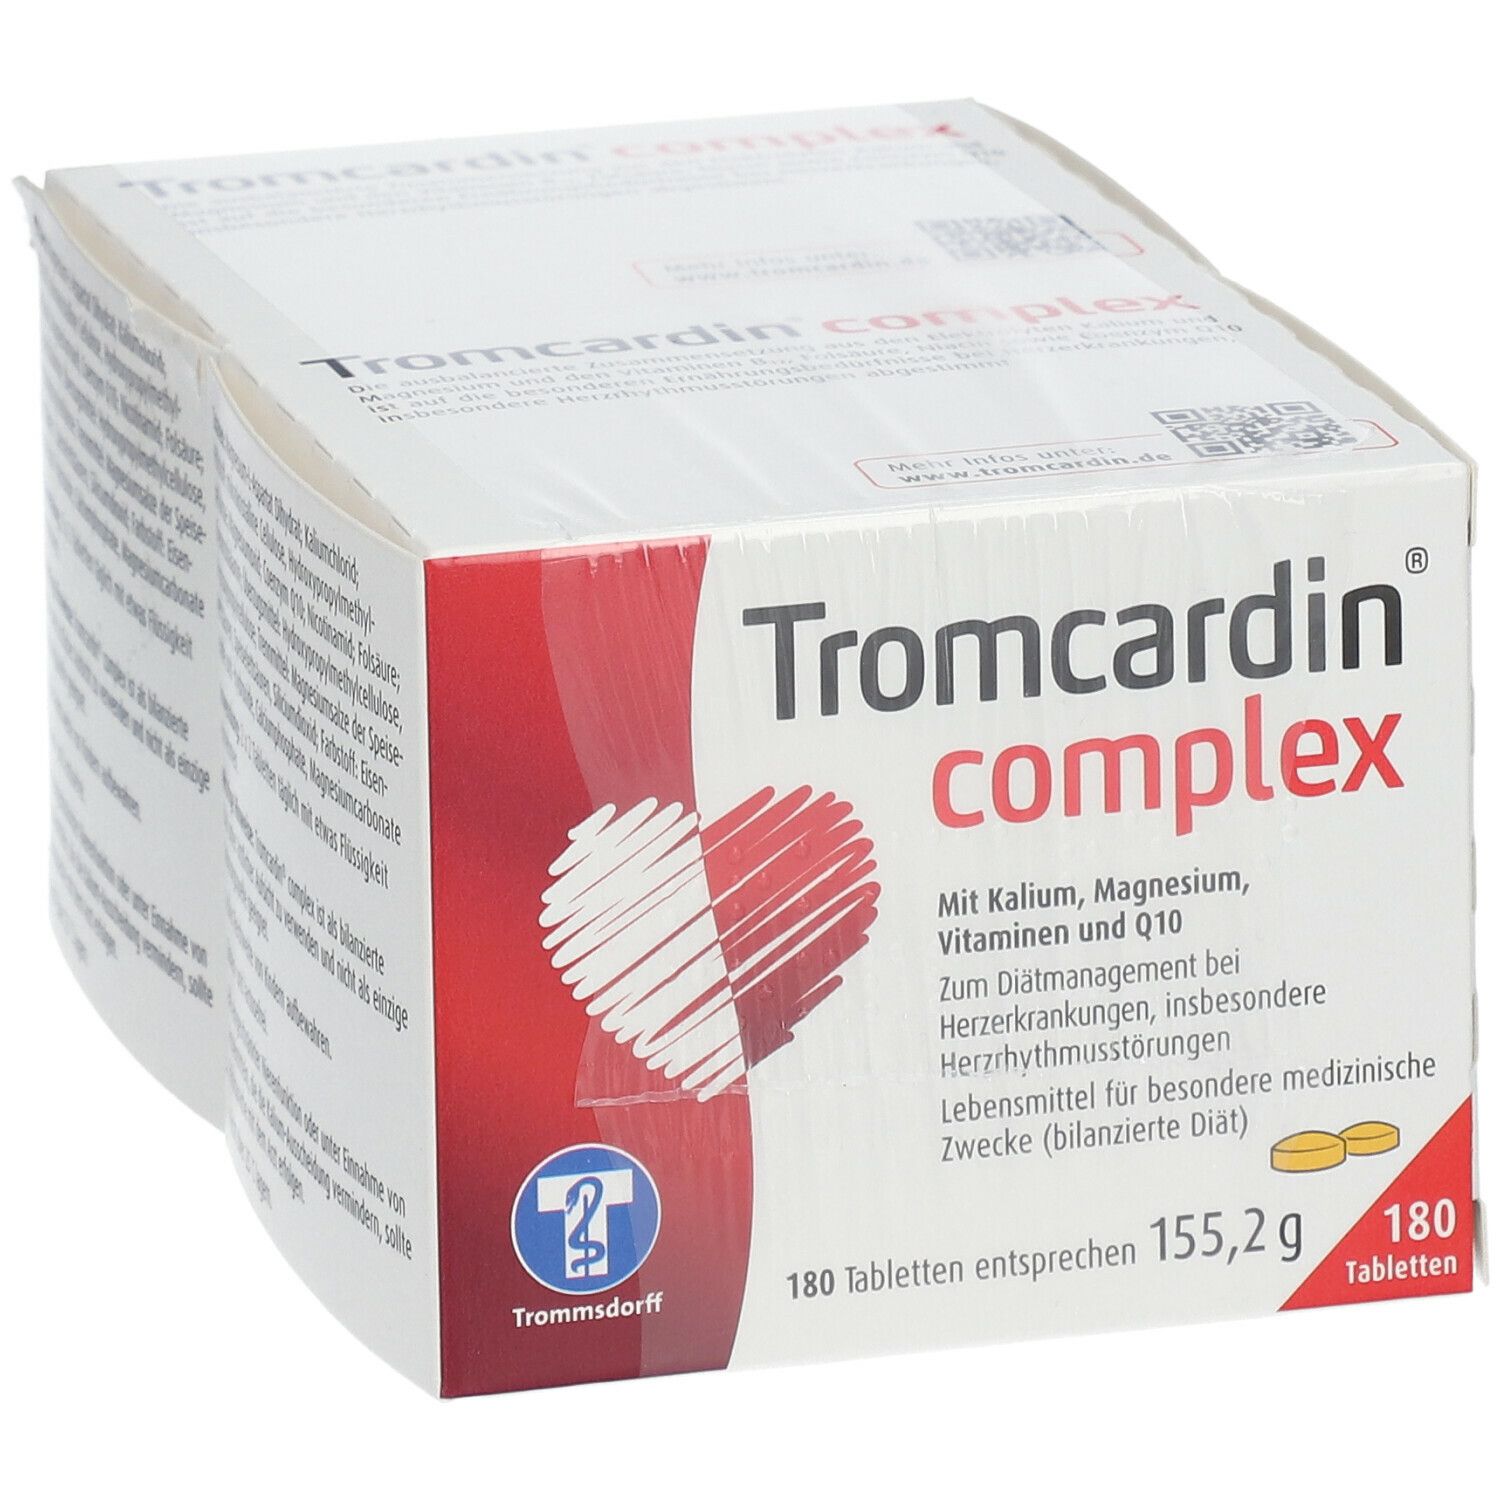 Tromcardin complex Set